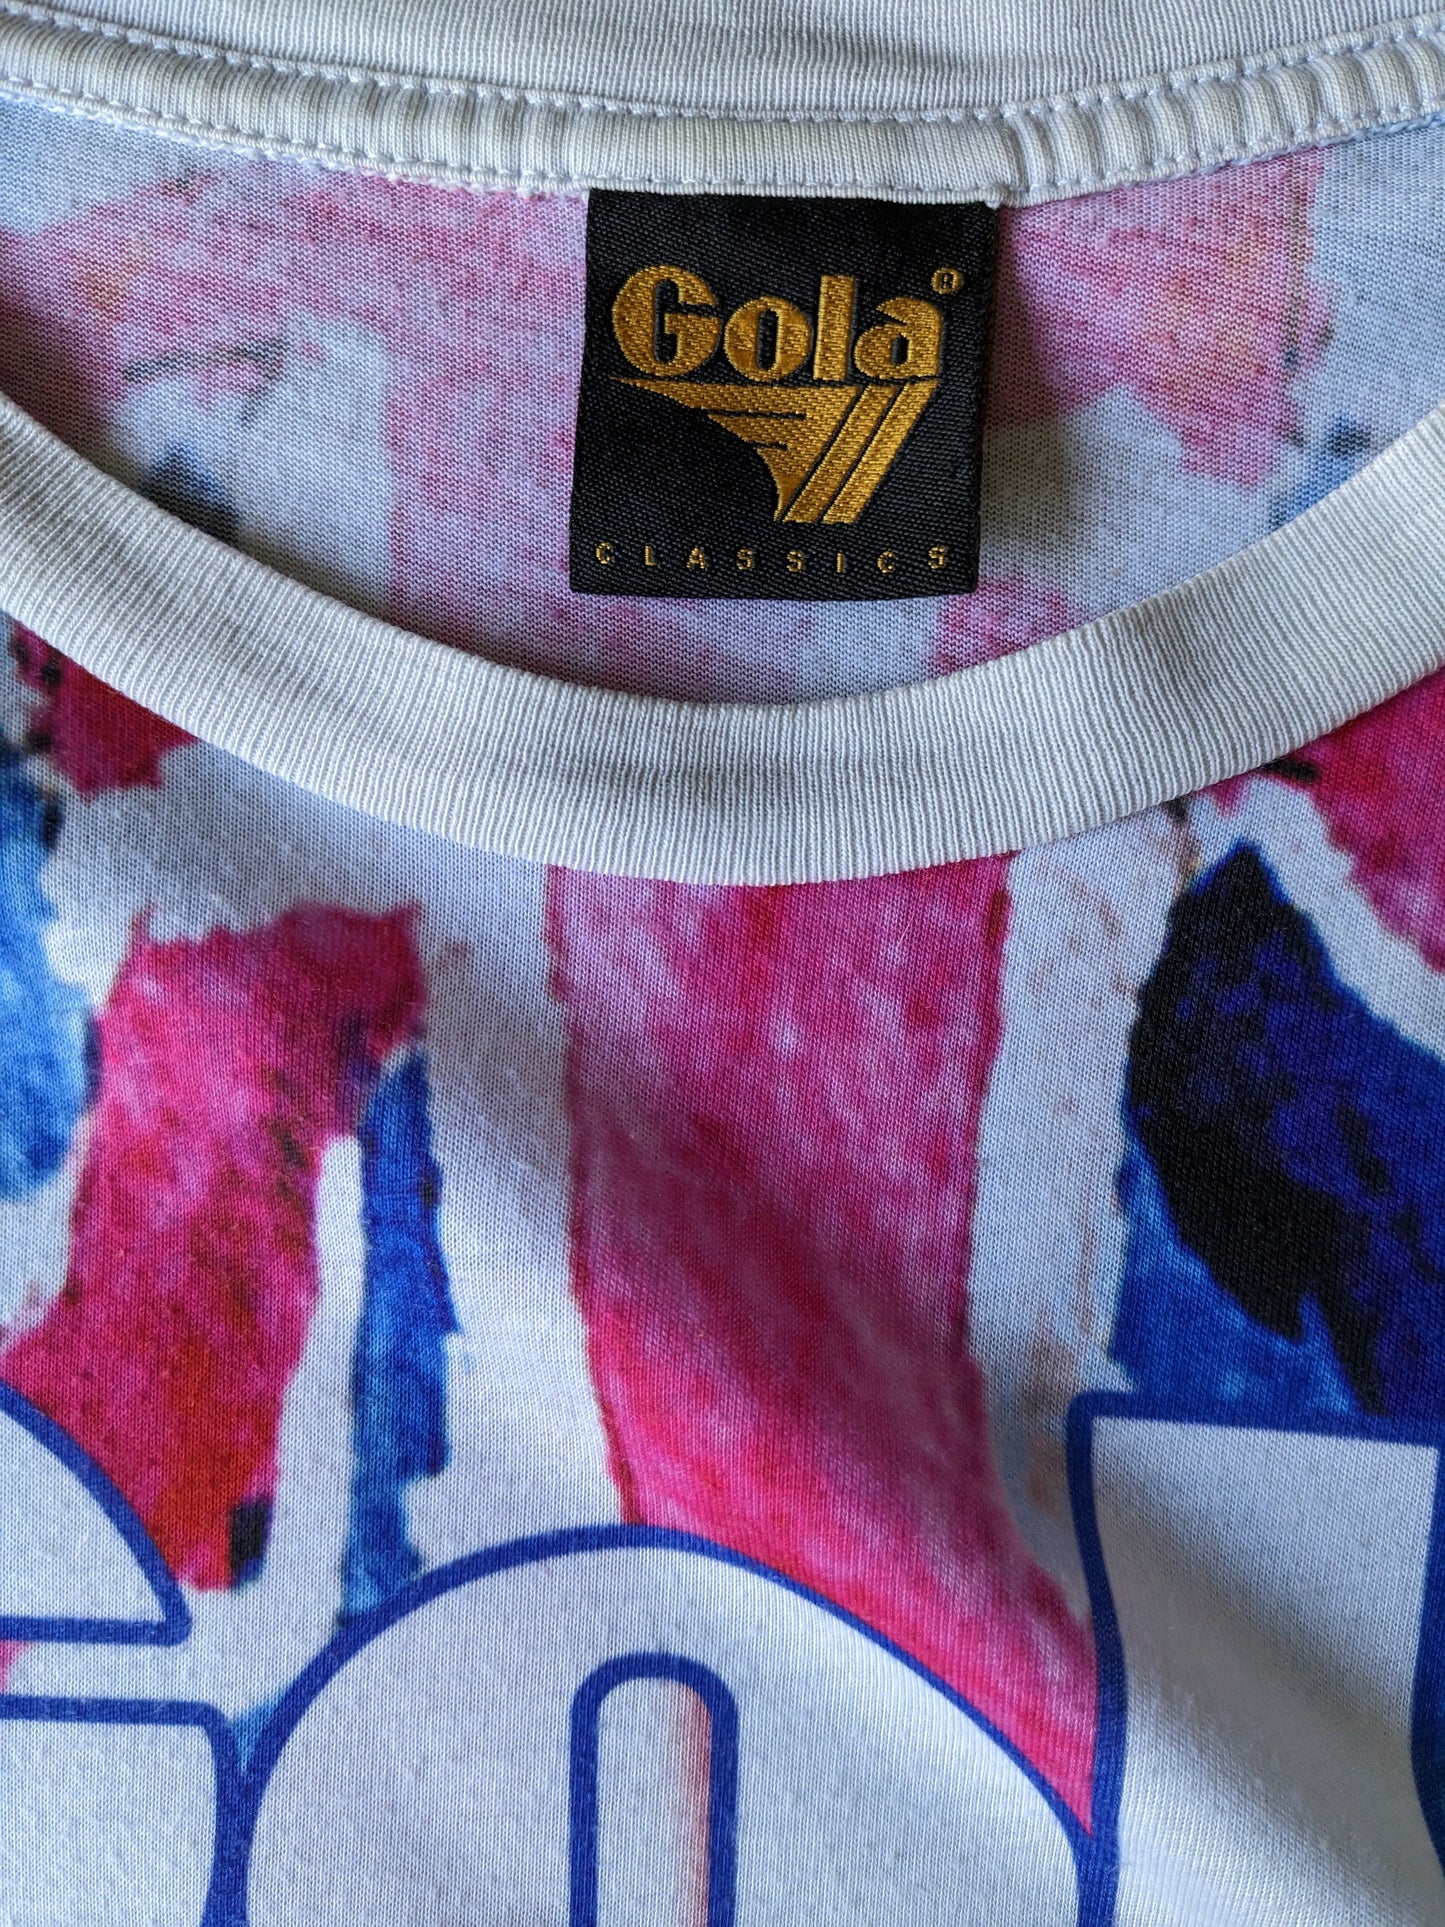 Gola Classics Shirt. Blau weiß rosa Druck. Größe M.